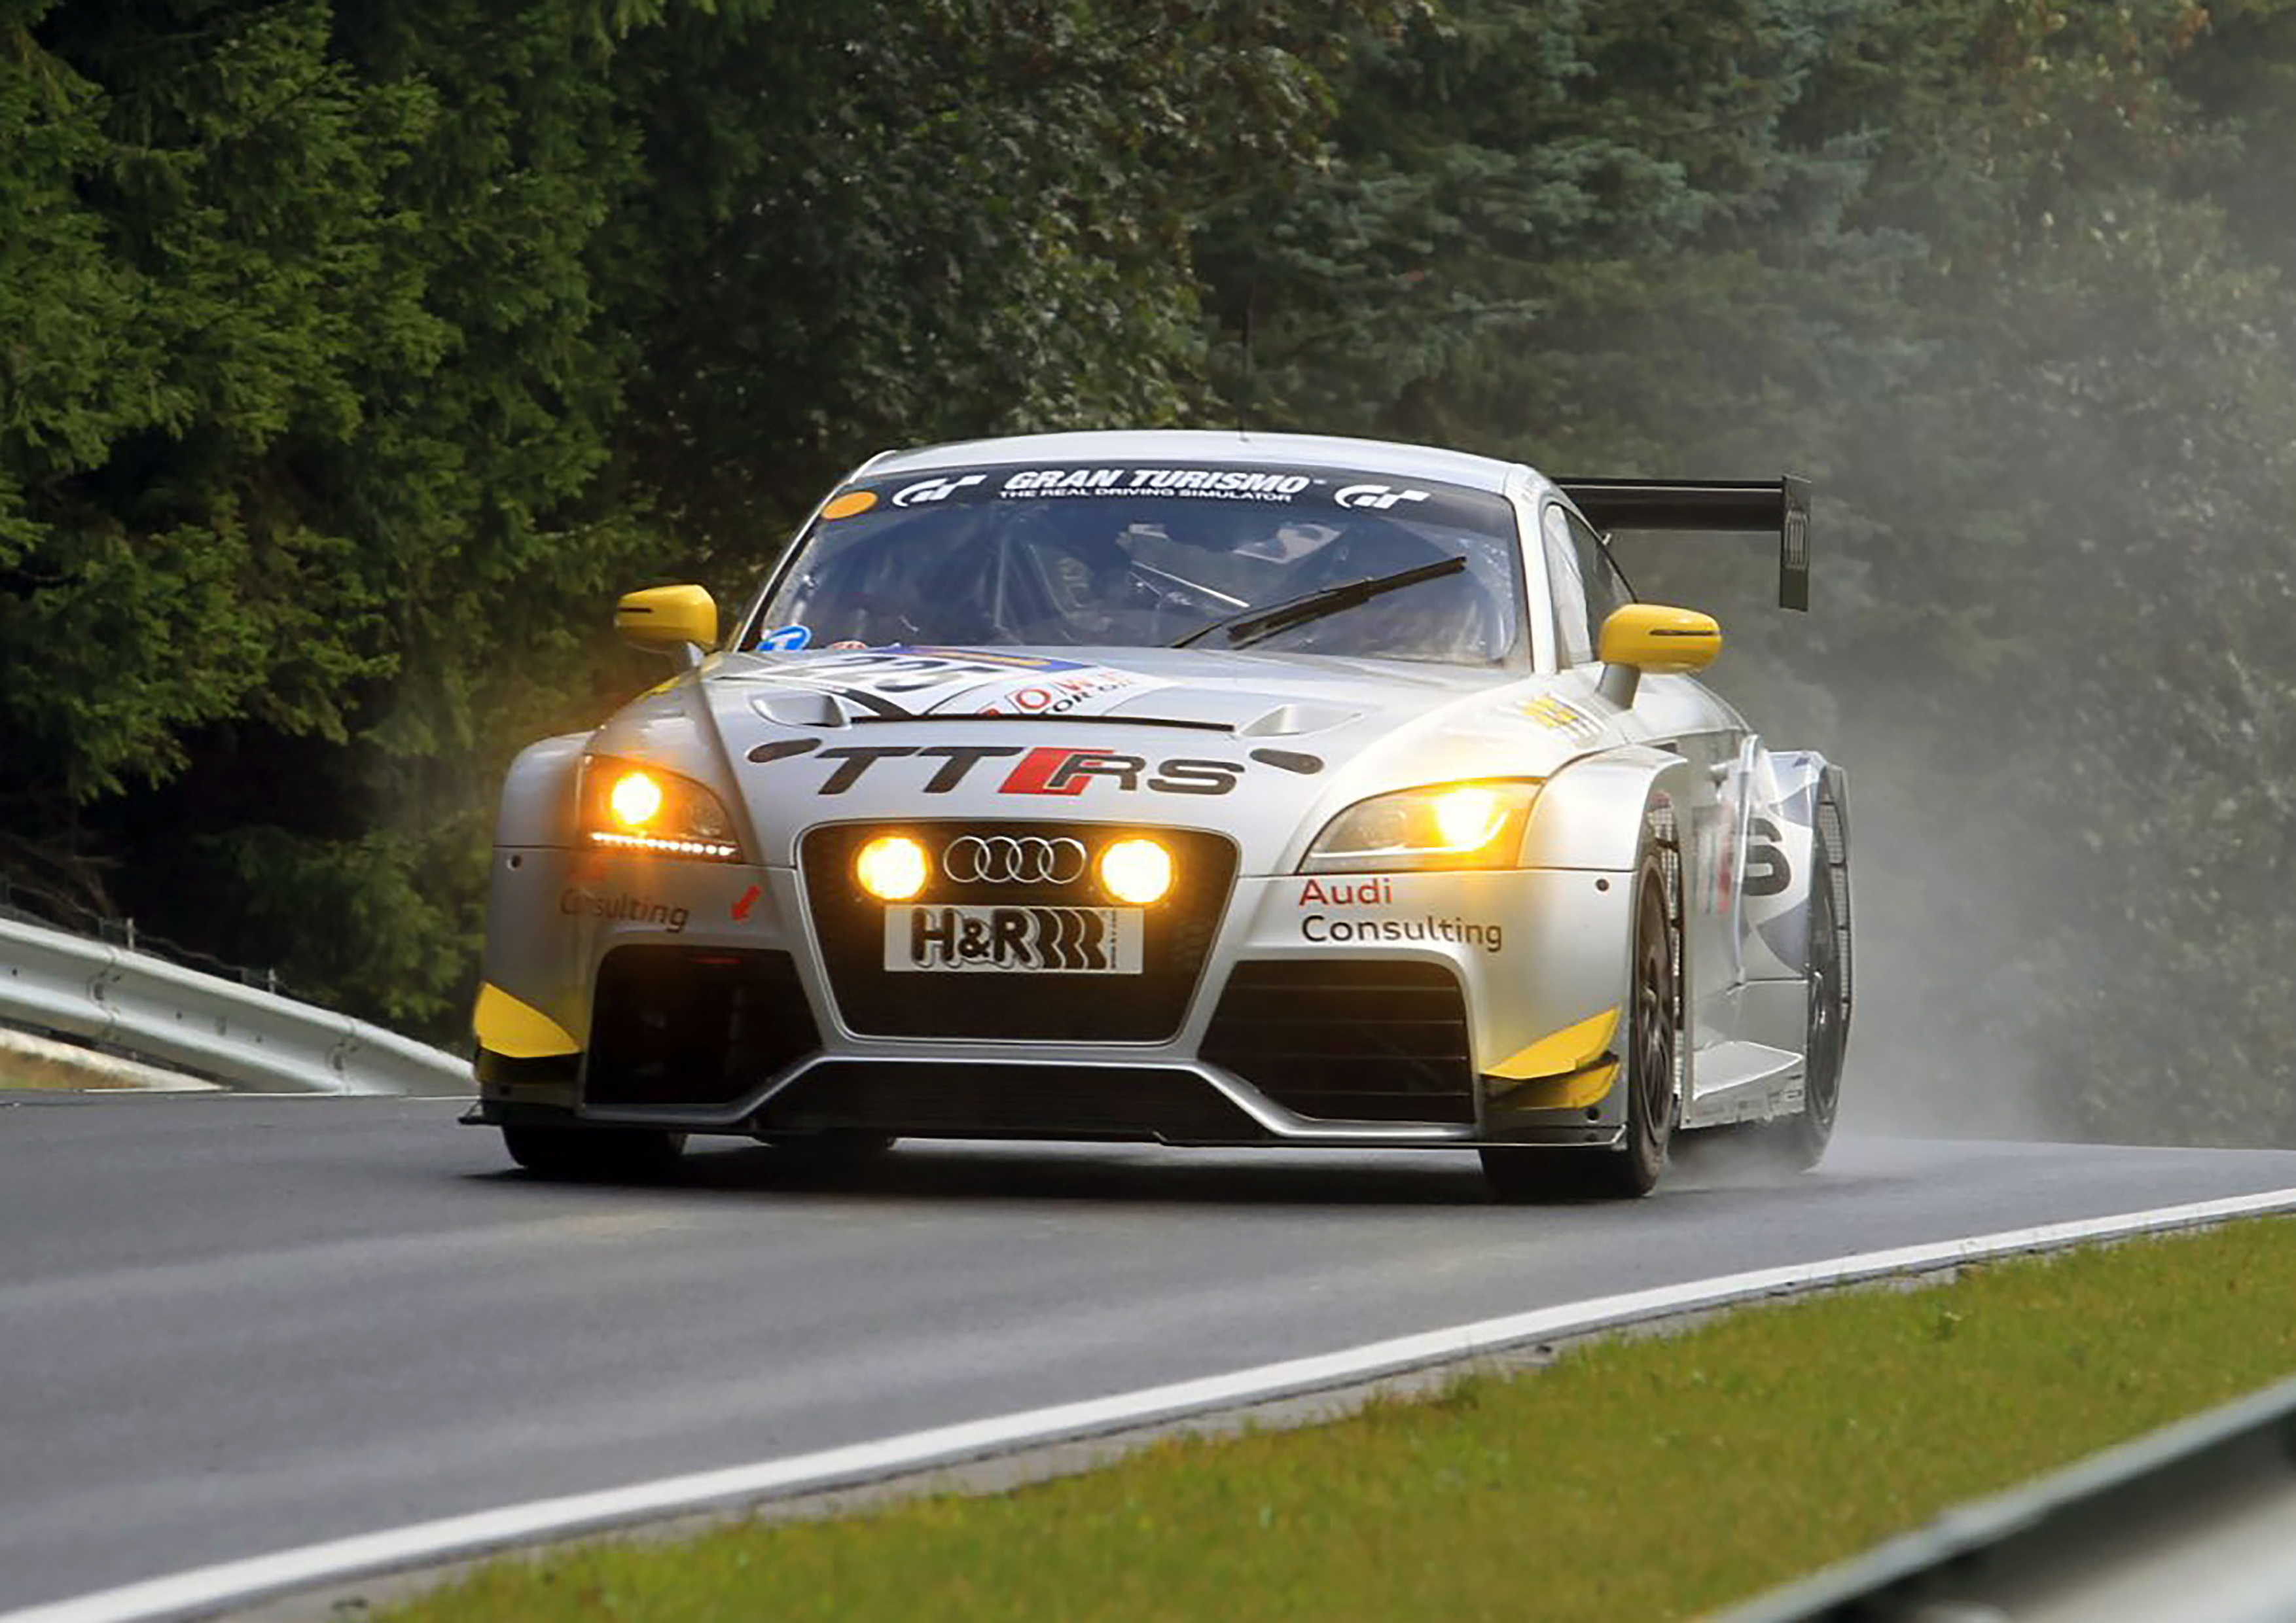 Audi TT RS racing car, model year 2011